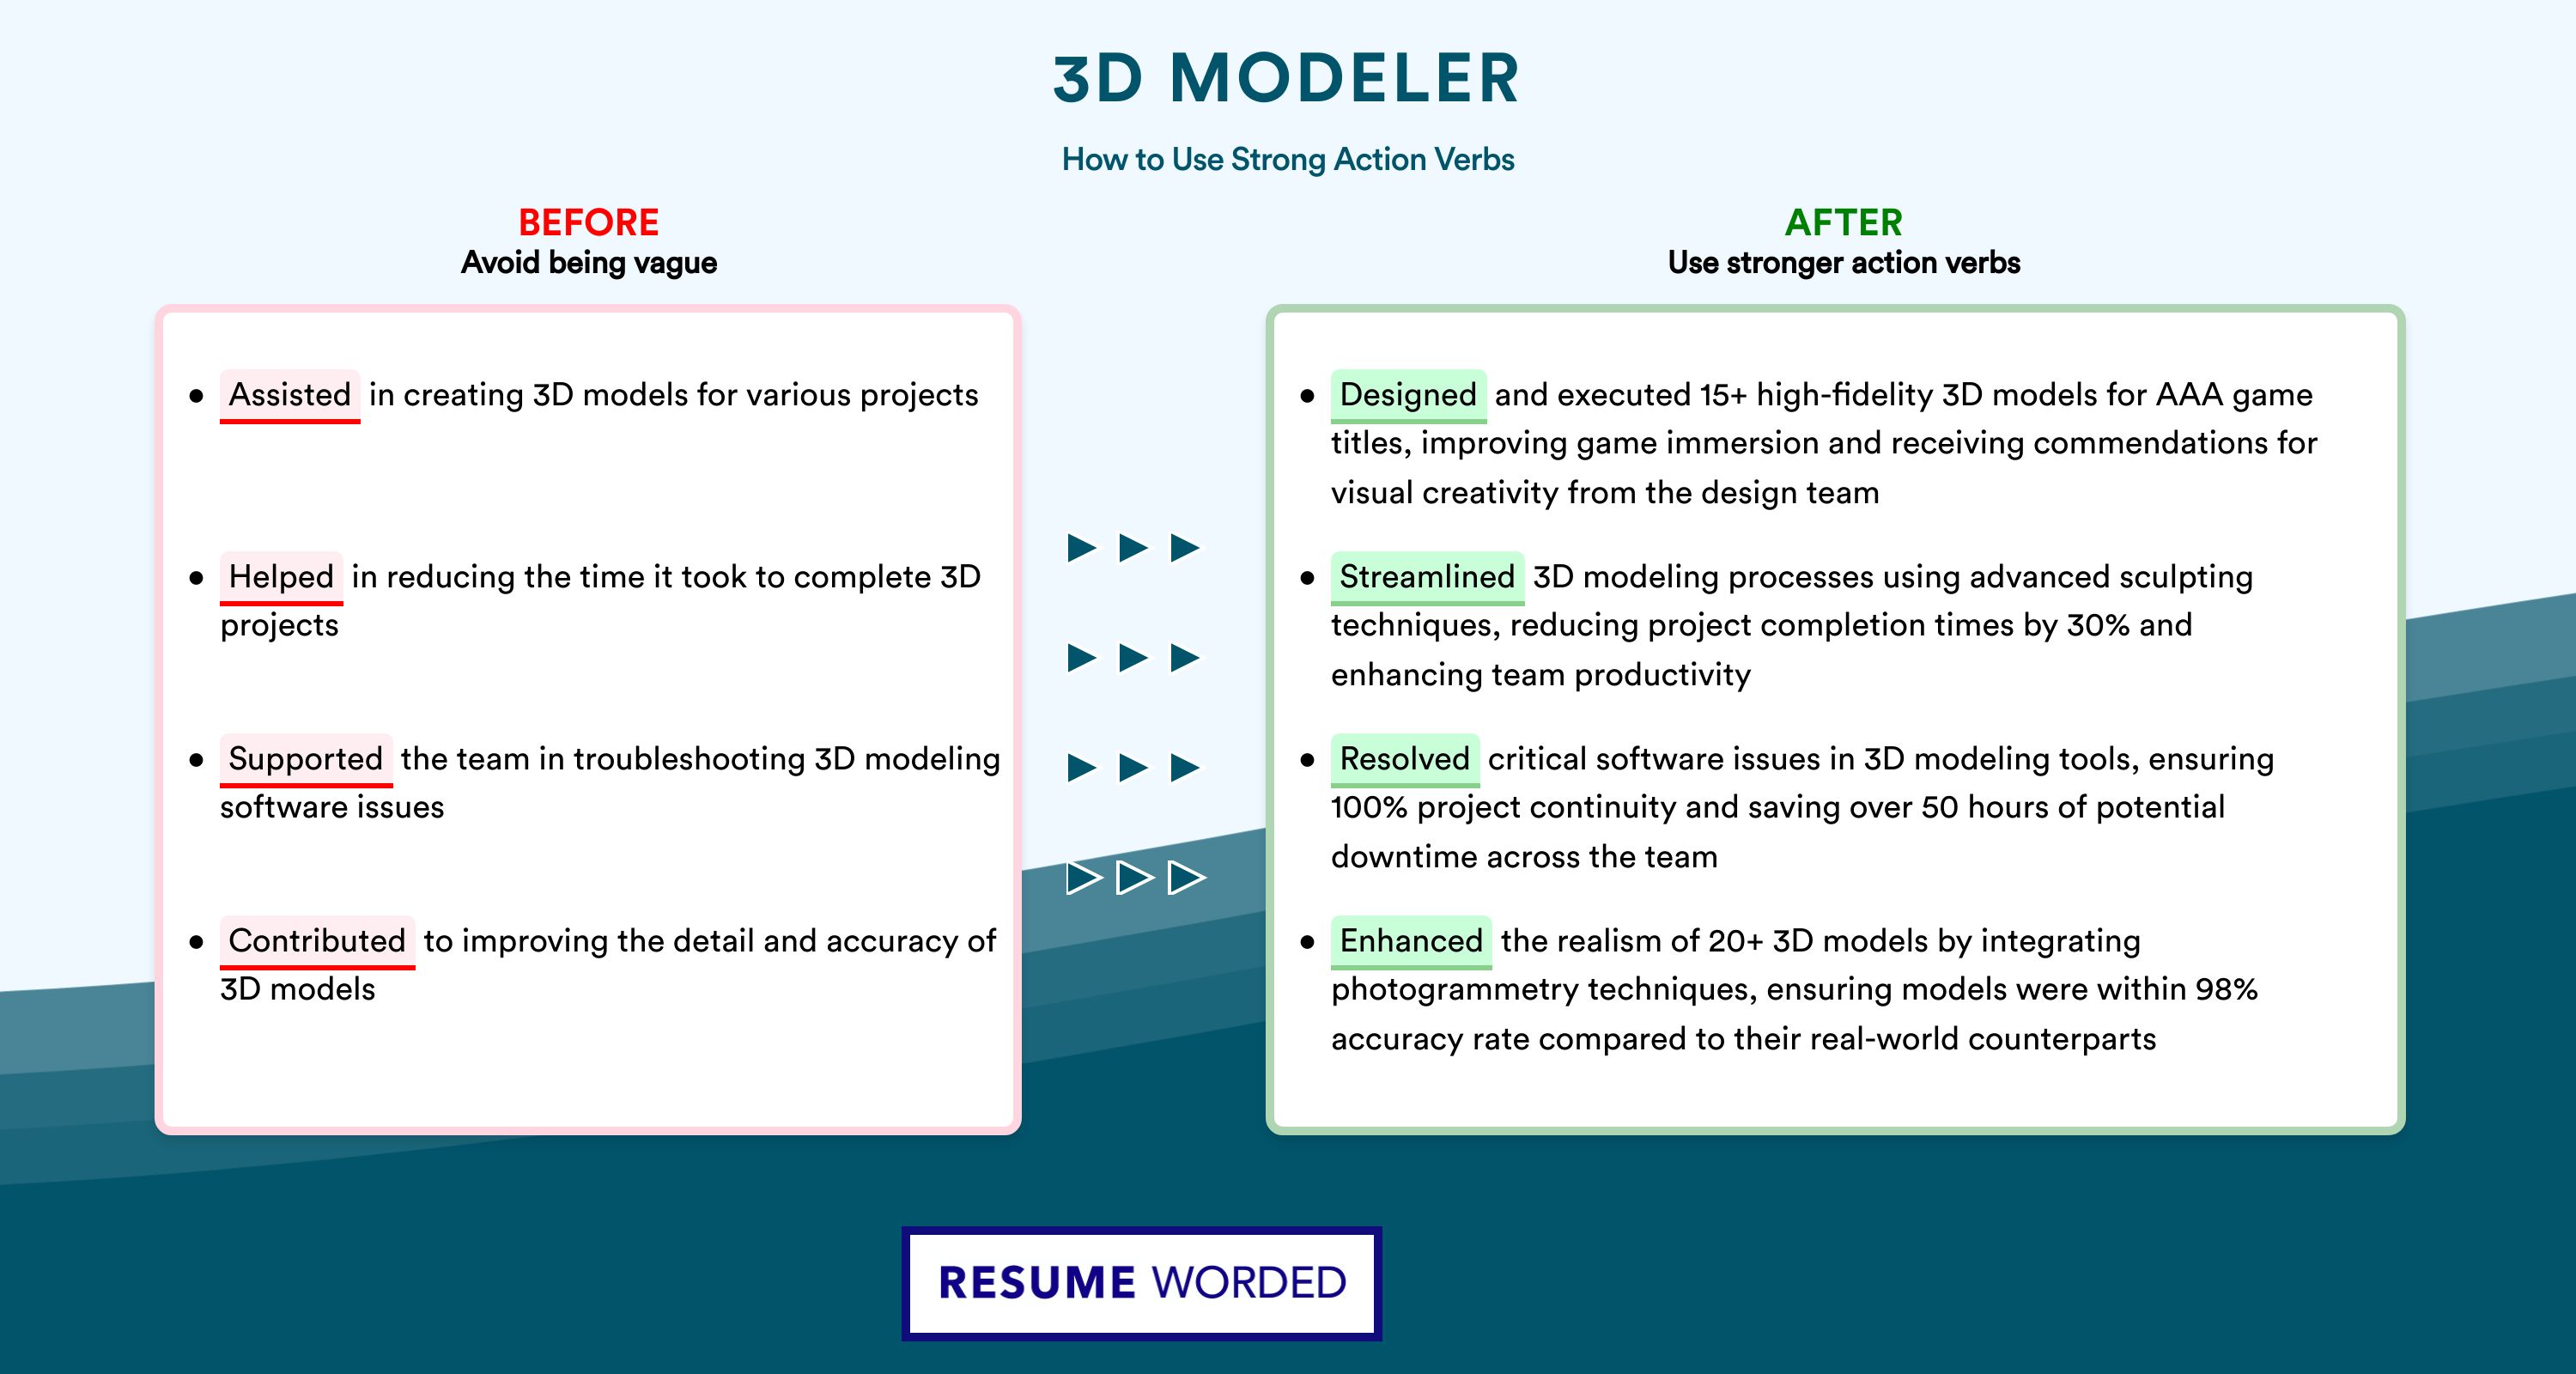 Action Verbs for 3D Modeler